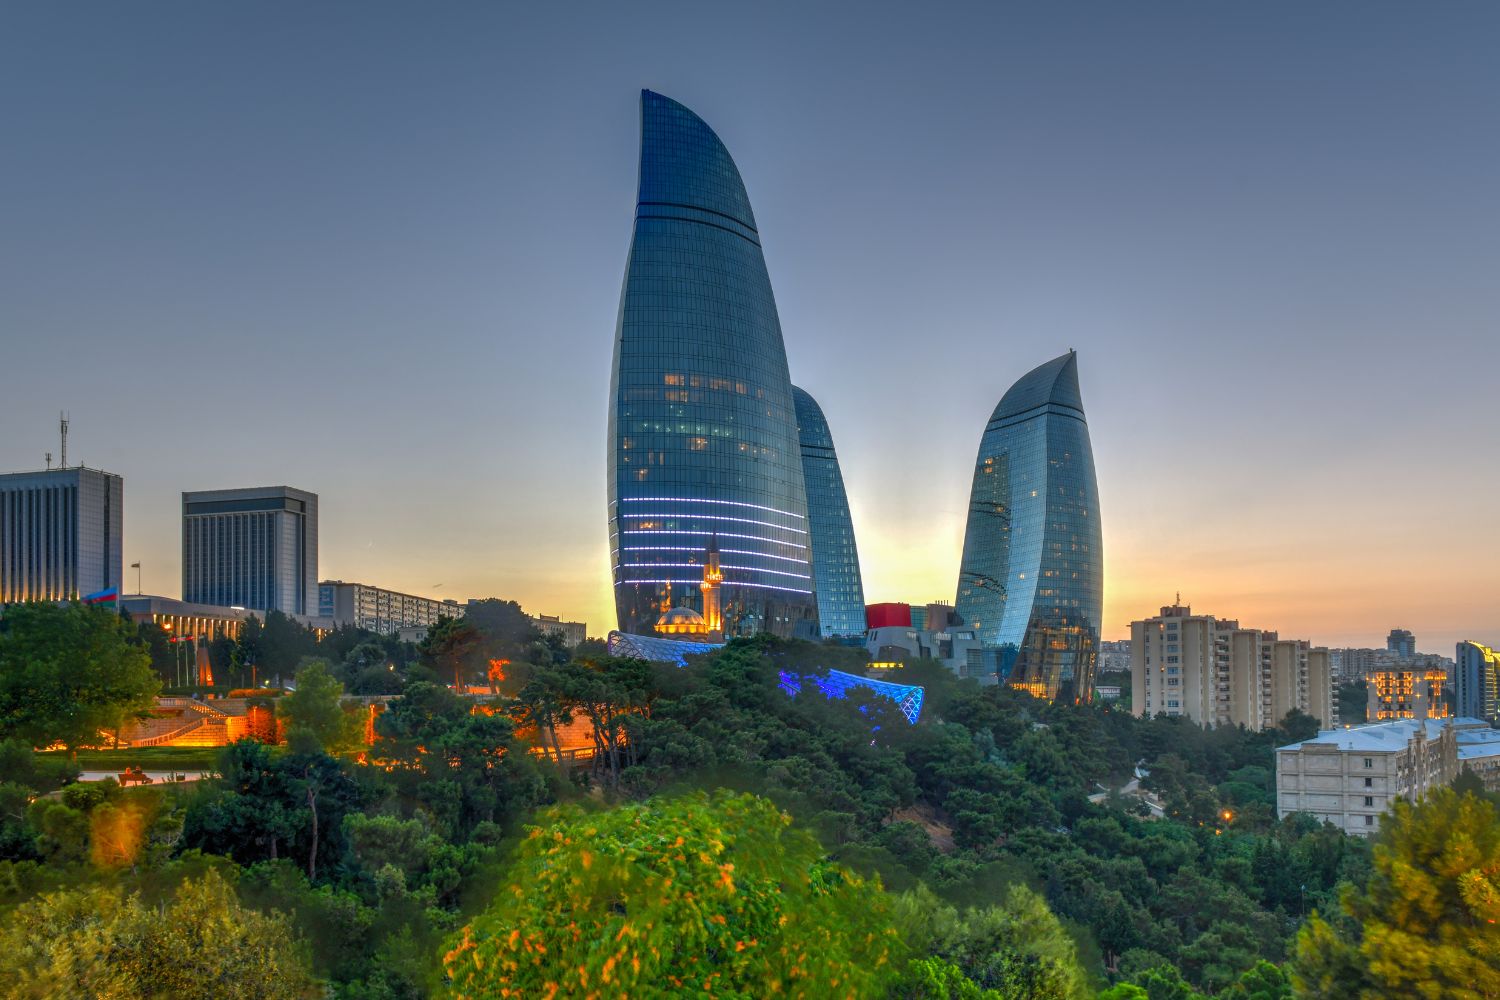 Where is Azerbaijan located